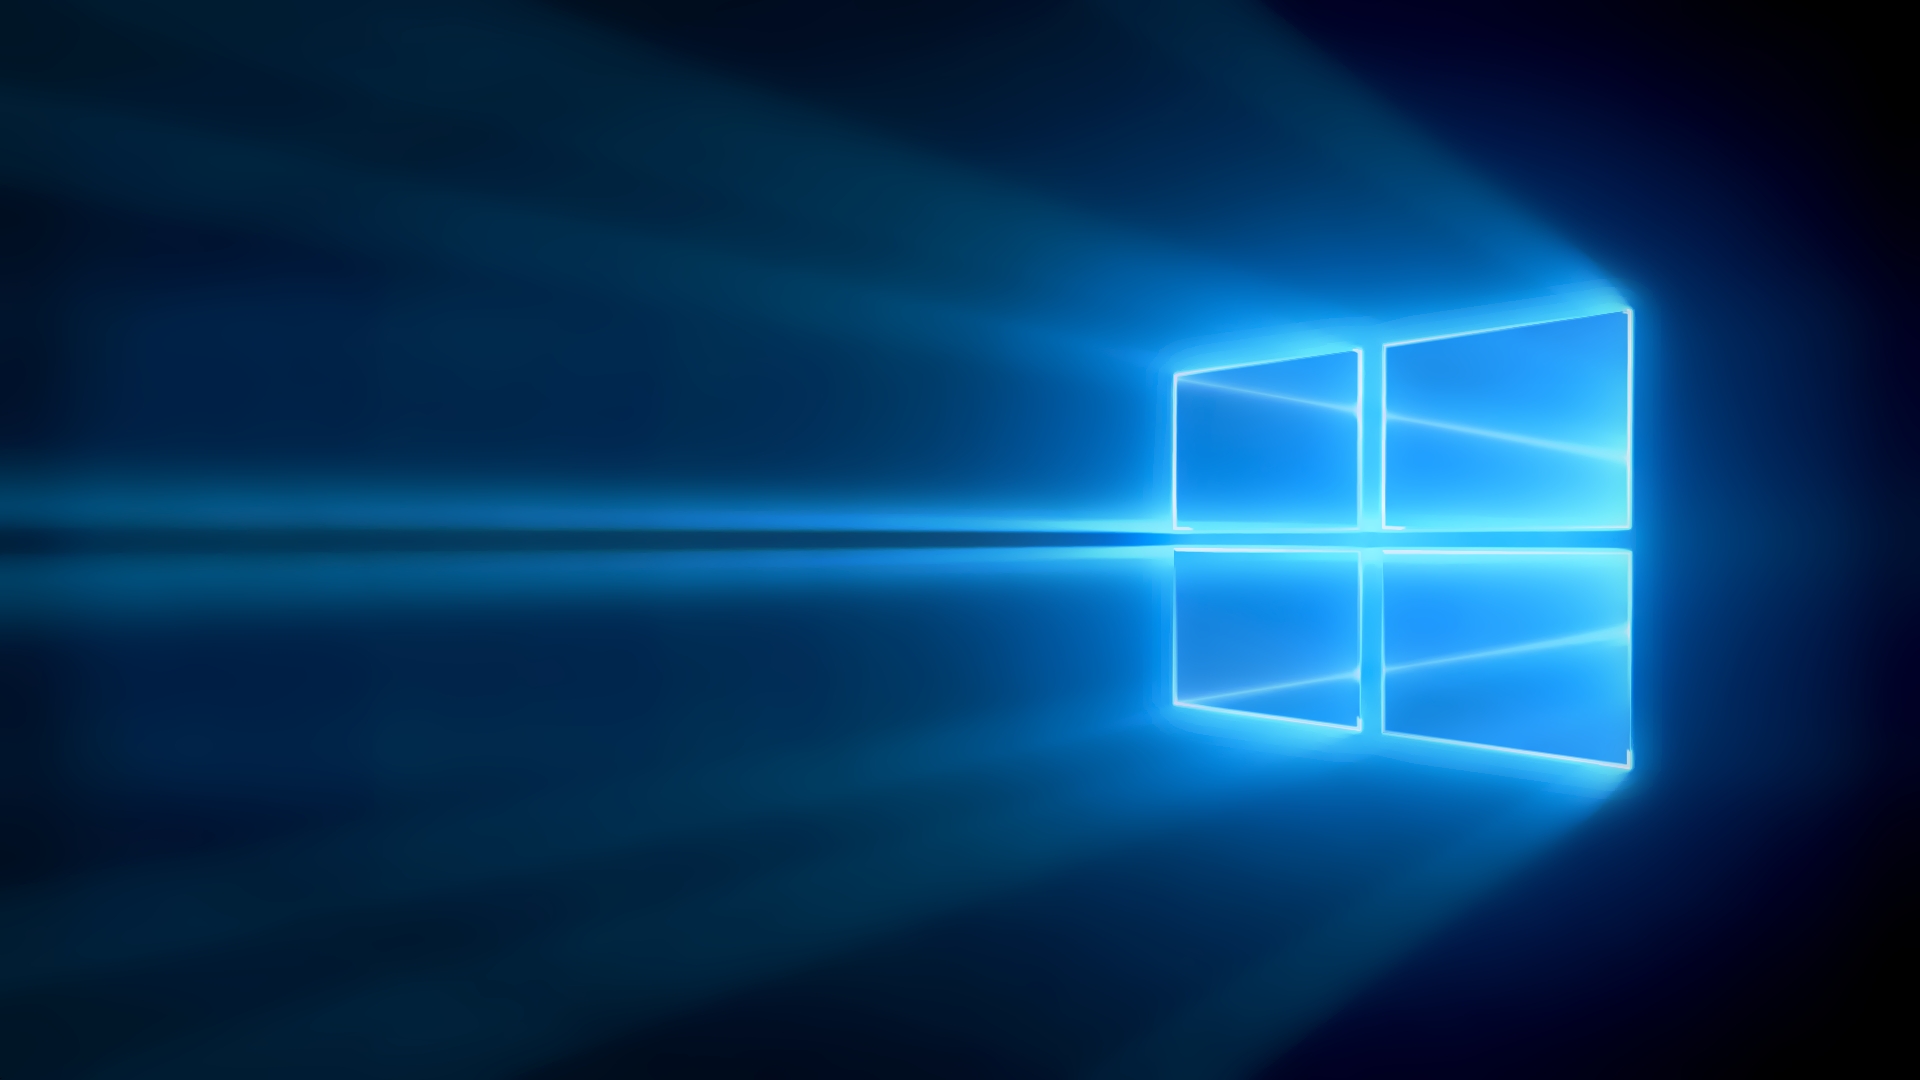 Windows 10 Official Wallpaper windows 10 official wallpaperjpg